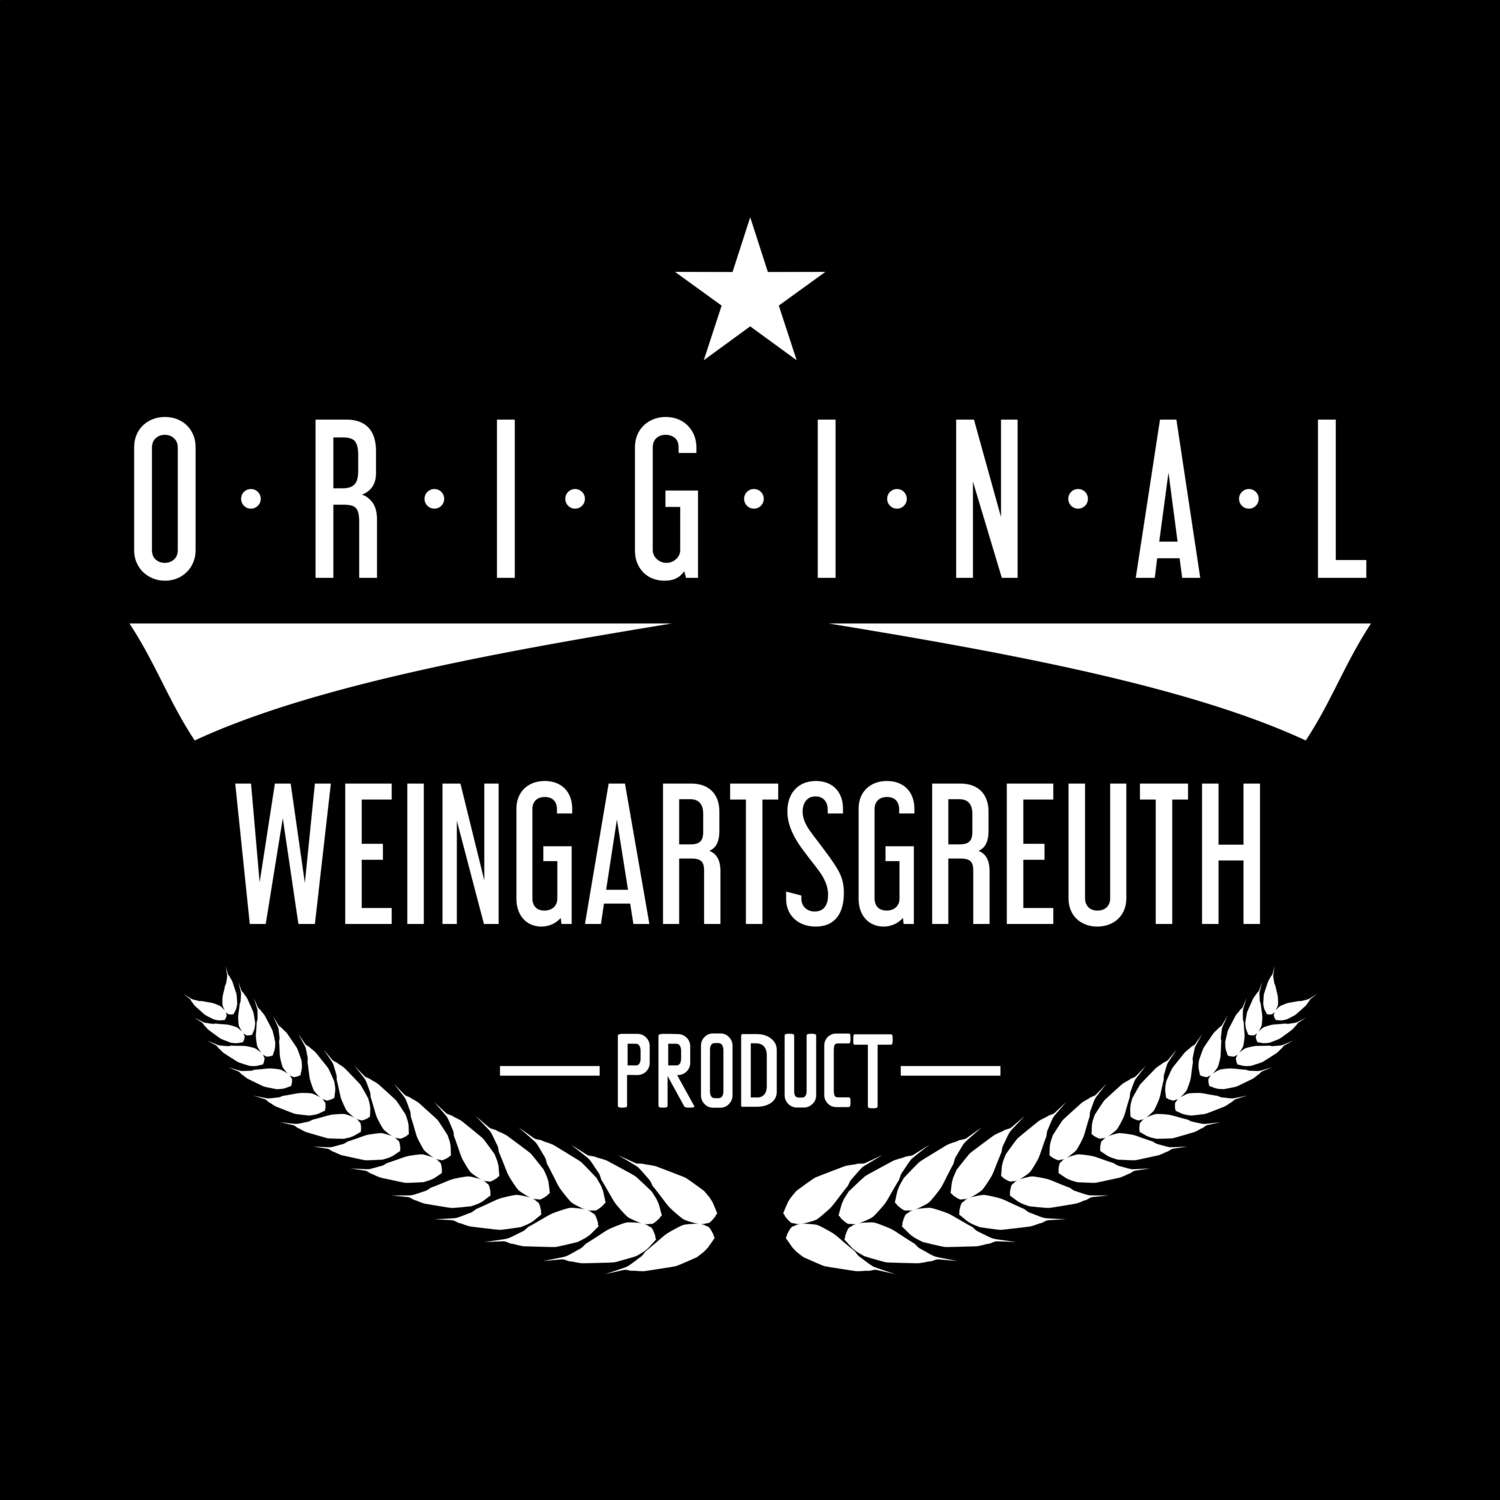 Weingartsgreuth T-Shirt »Original Product«